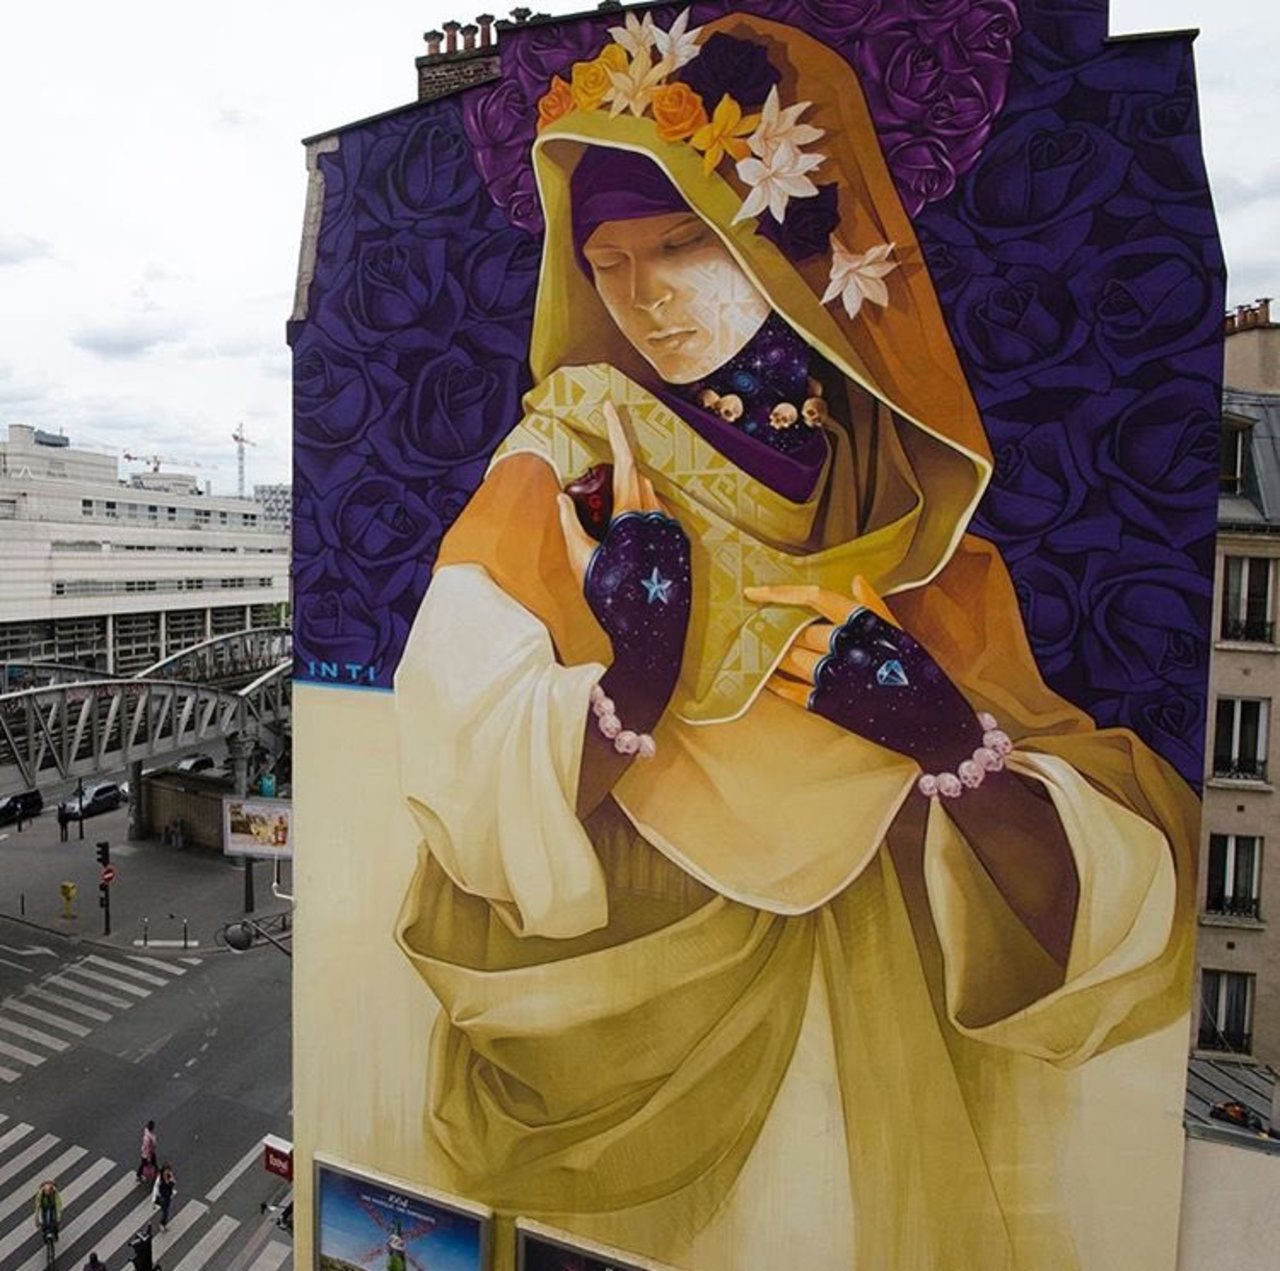 New Street Art by Inti in Paris  #art #mural #graffiti #streetart https://t.co/XCLOa0hKeN